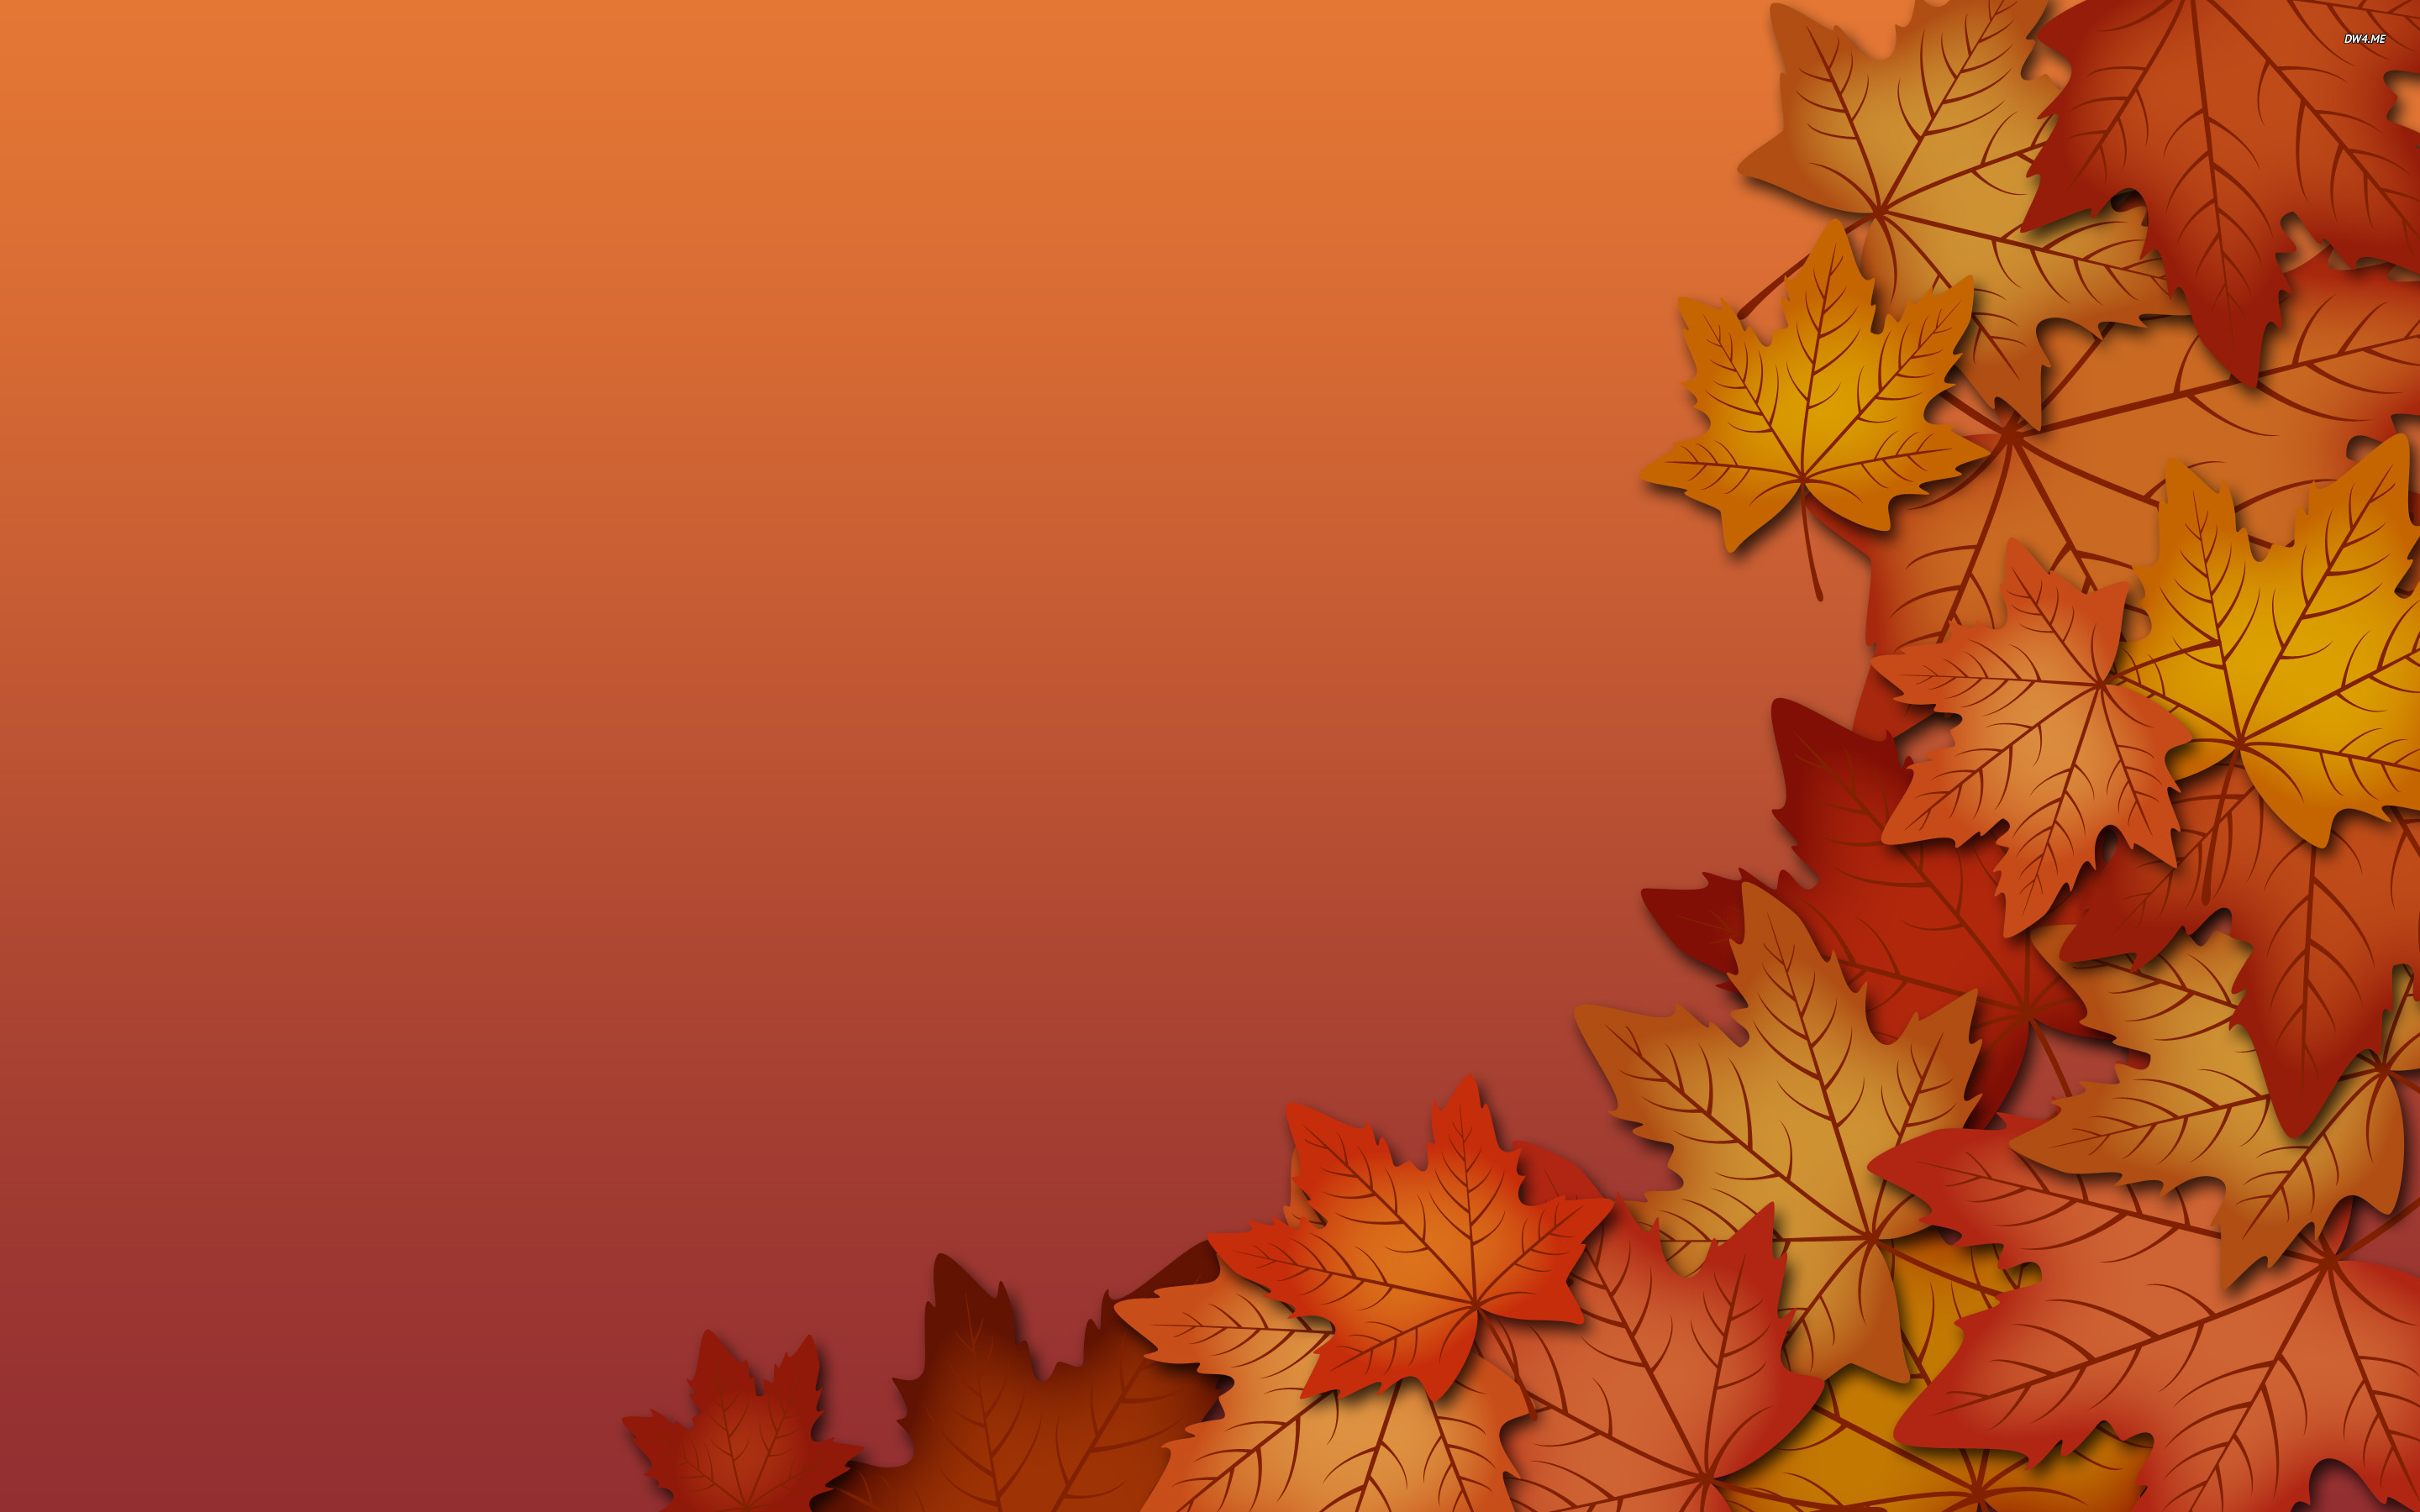 Autumn Leaves Wallpaper Vector